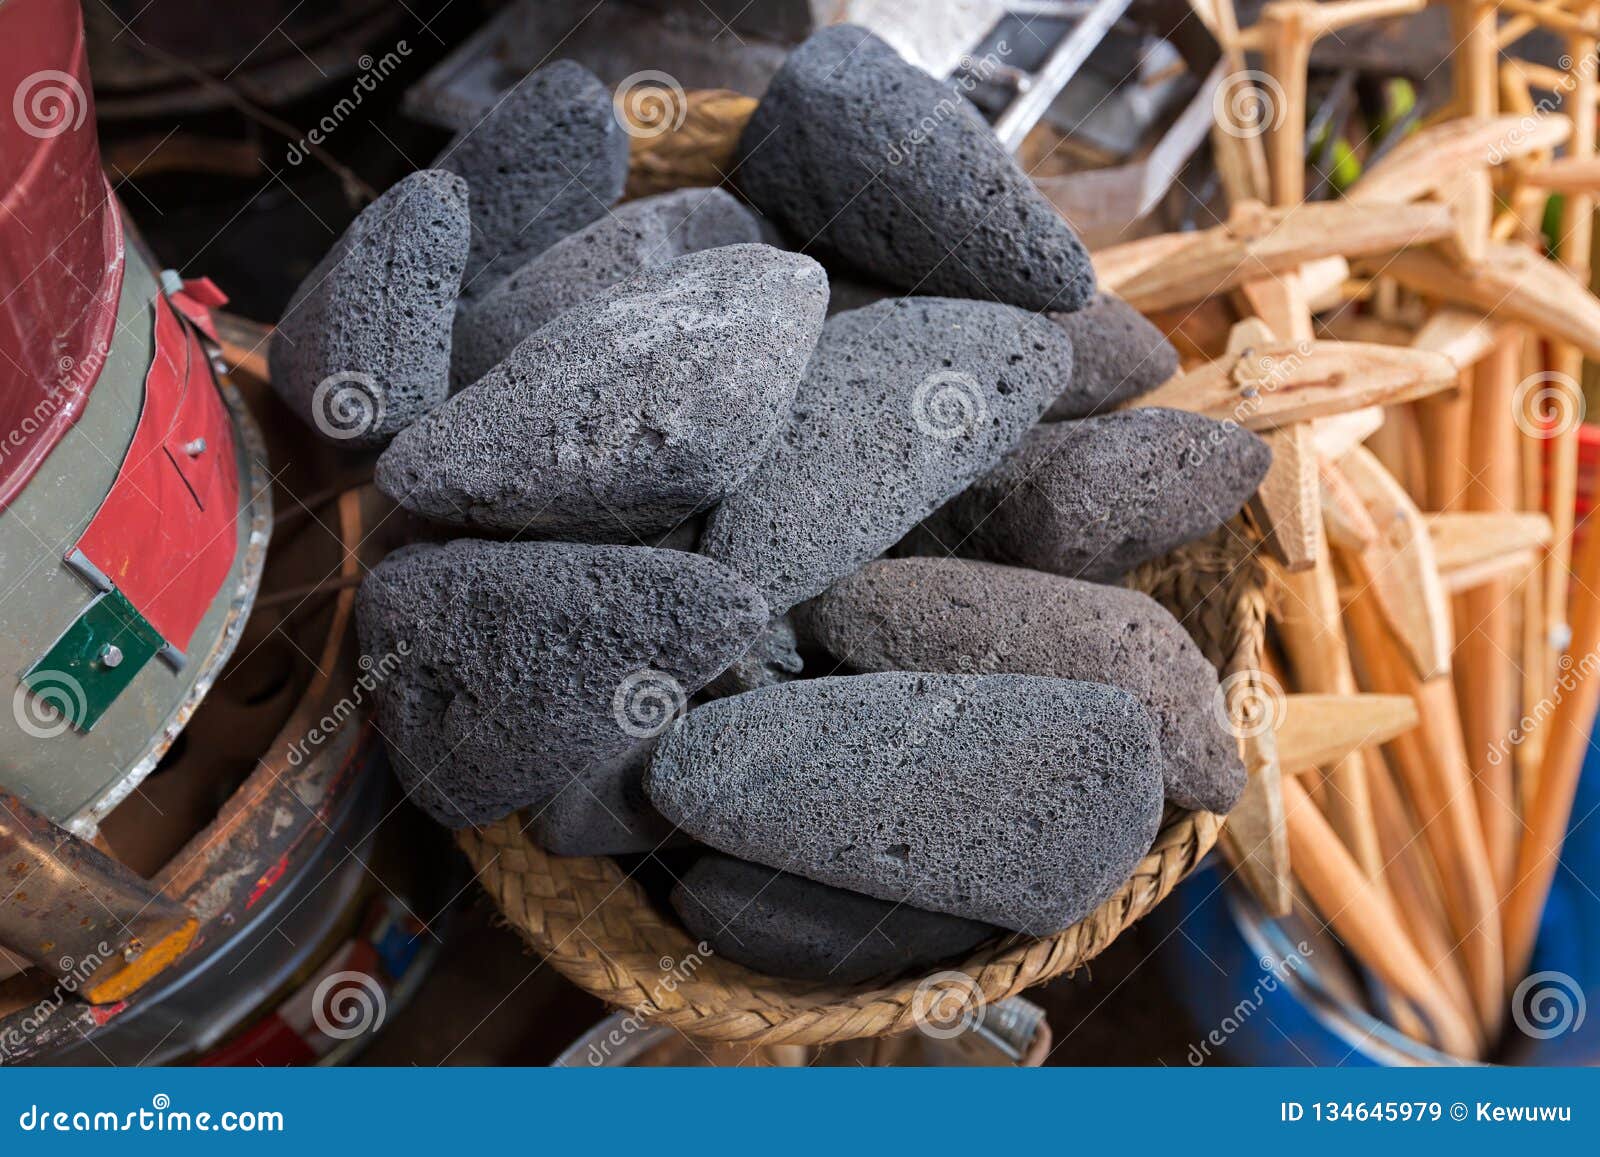 scoria stone, volcanic rock, black lava rough stones full of holes vesicles in dark color selling at mto wa mbu village, tanzania